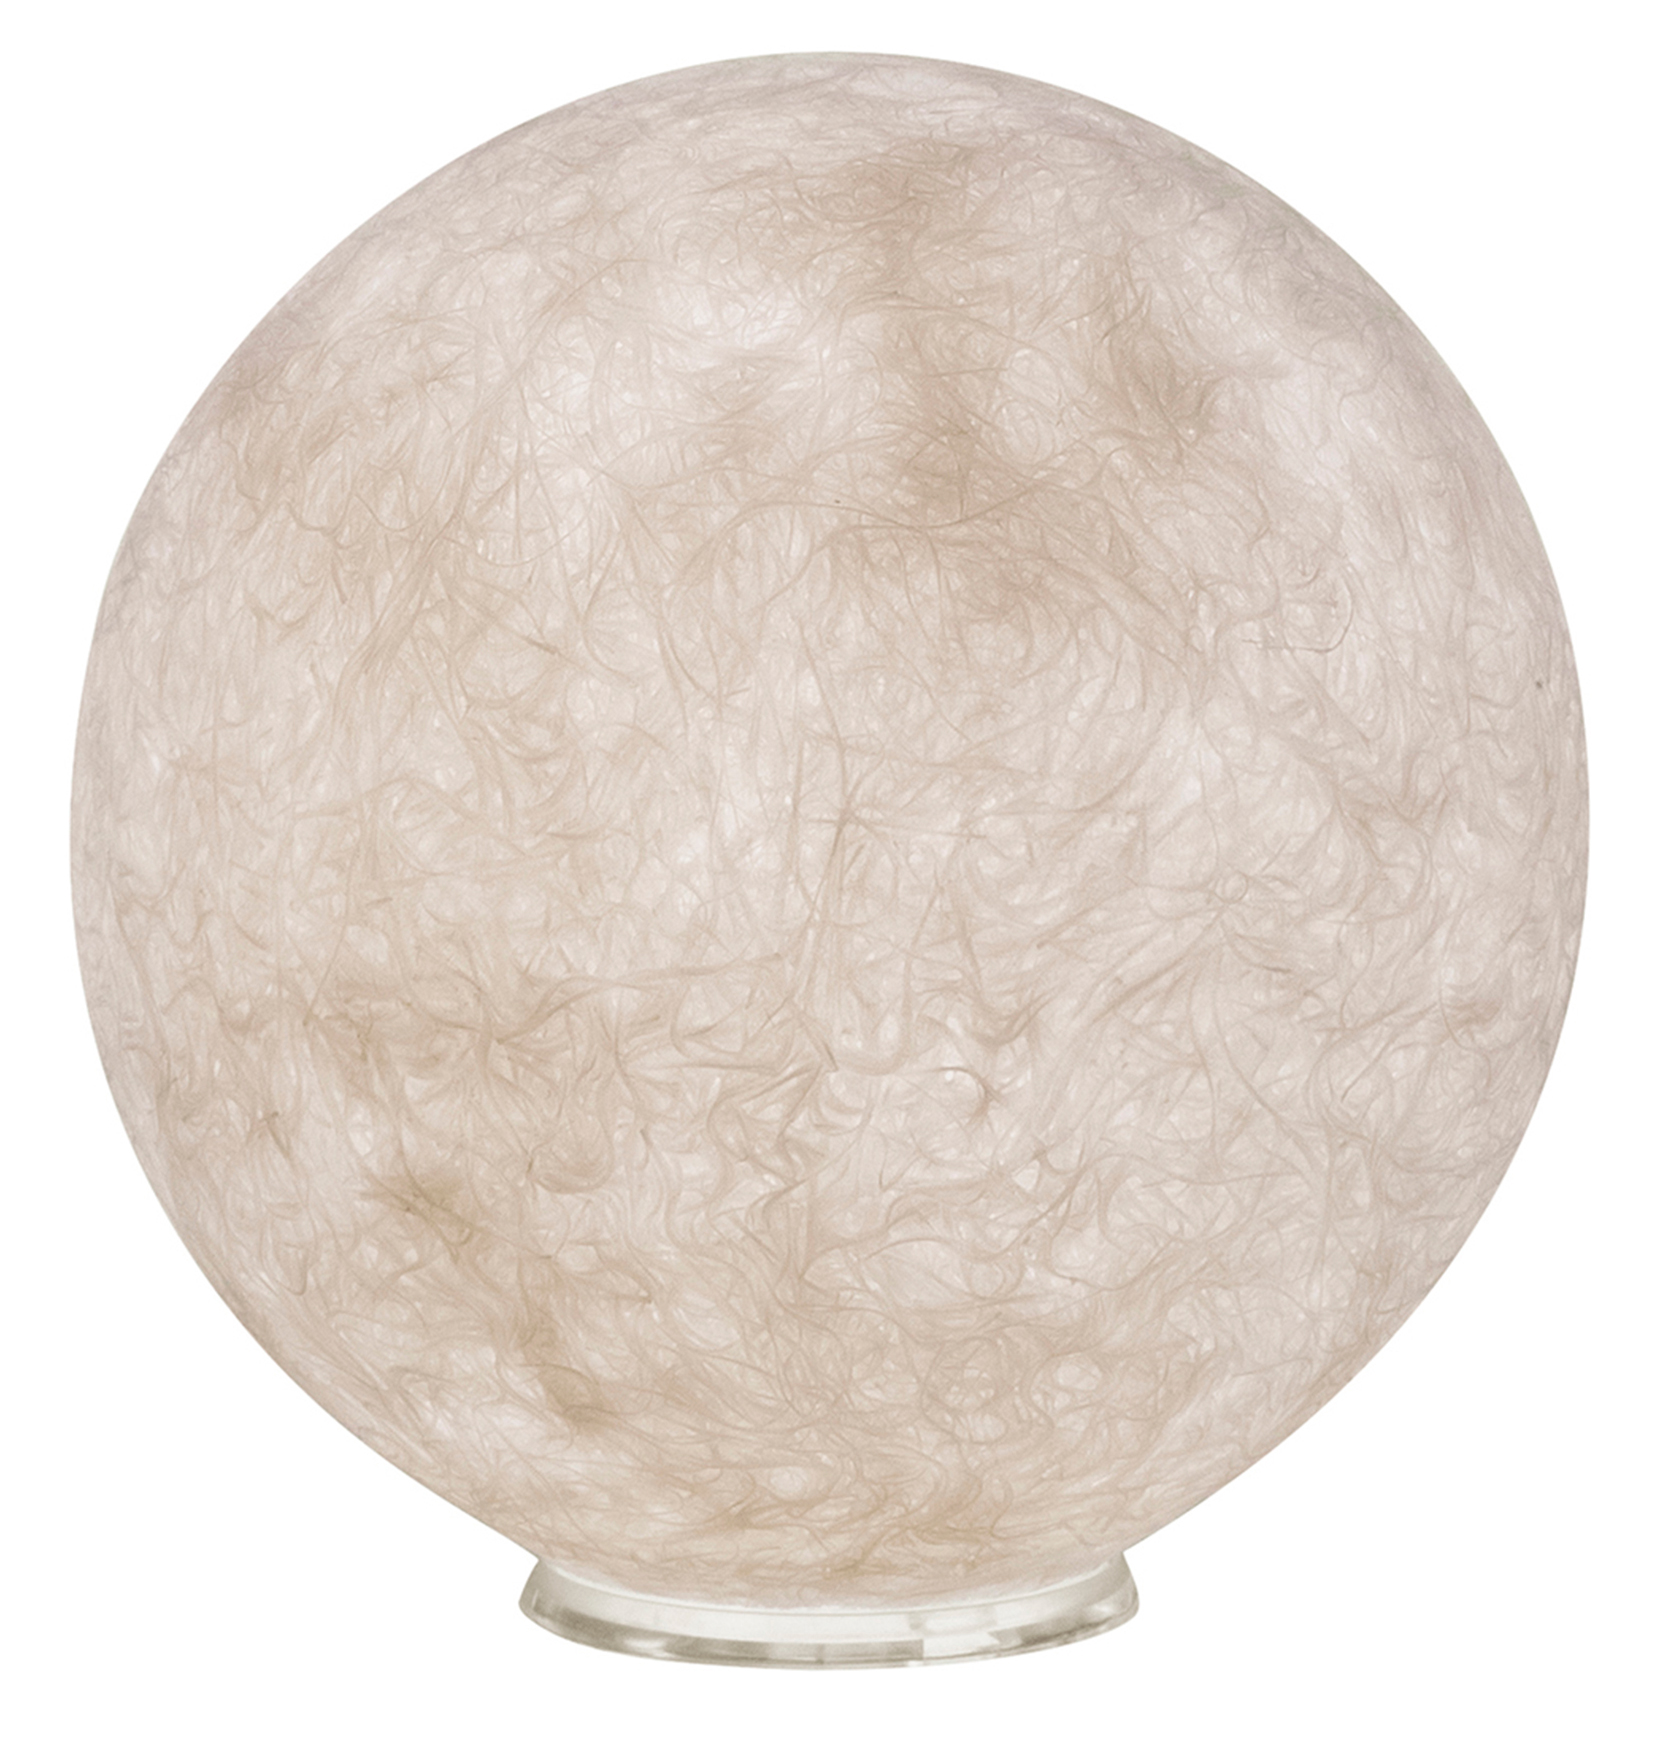 Moon Lamp – La Insular